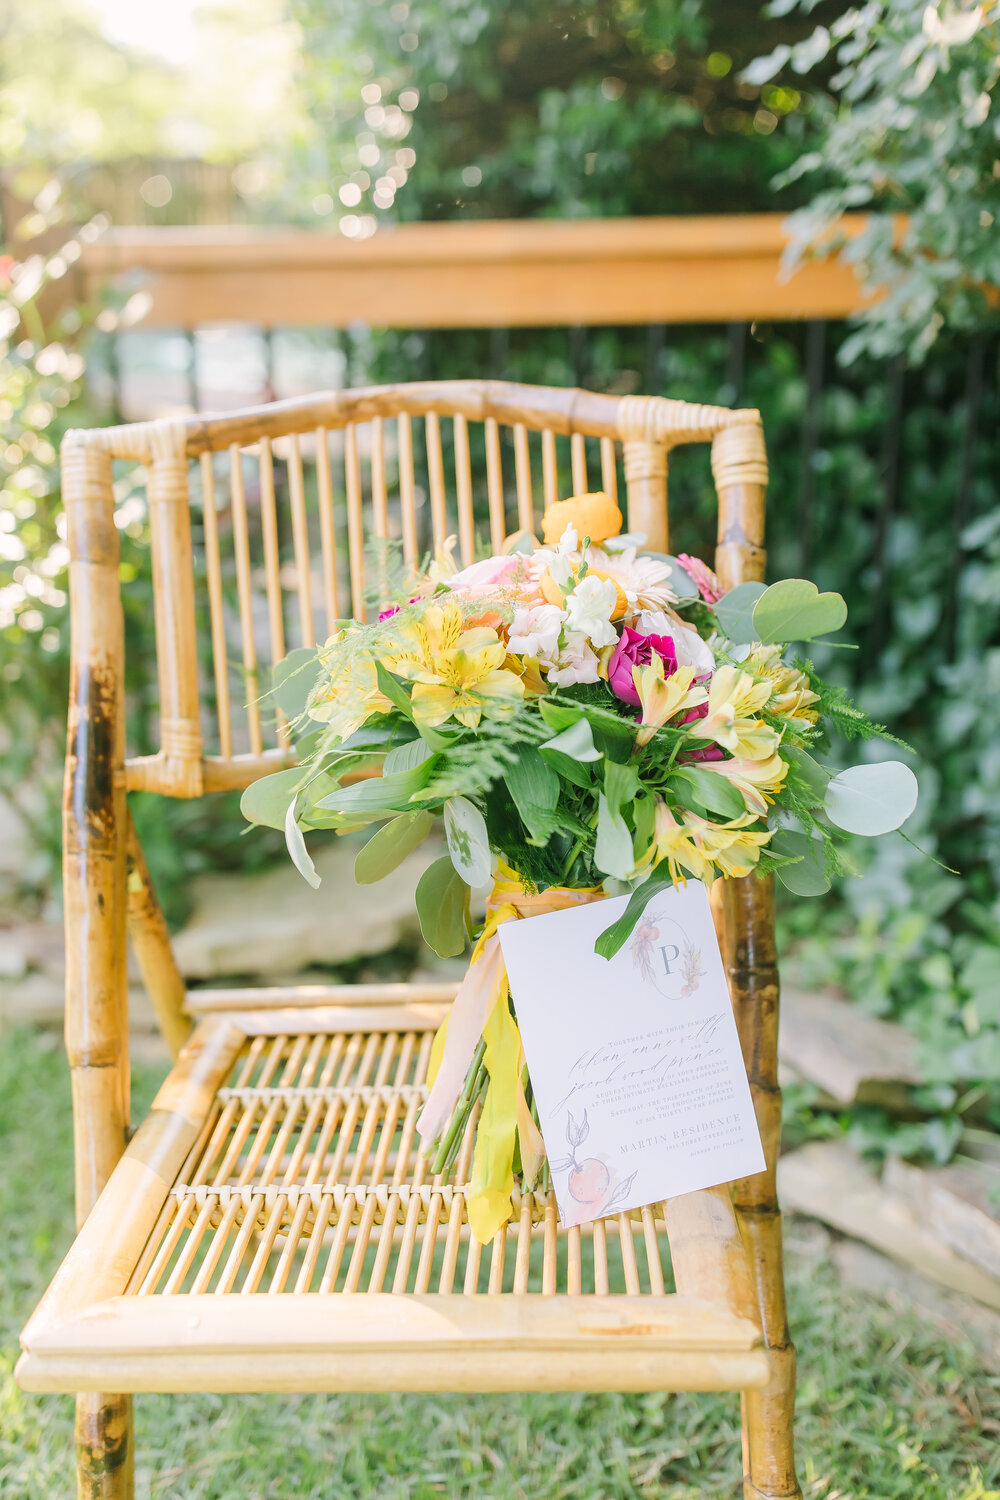 Invitation Design and Bridal Bouquet - Backyard Wedding Elopement 2020